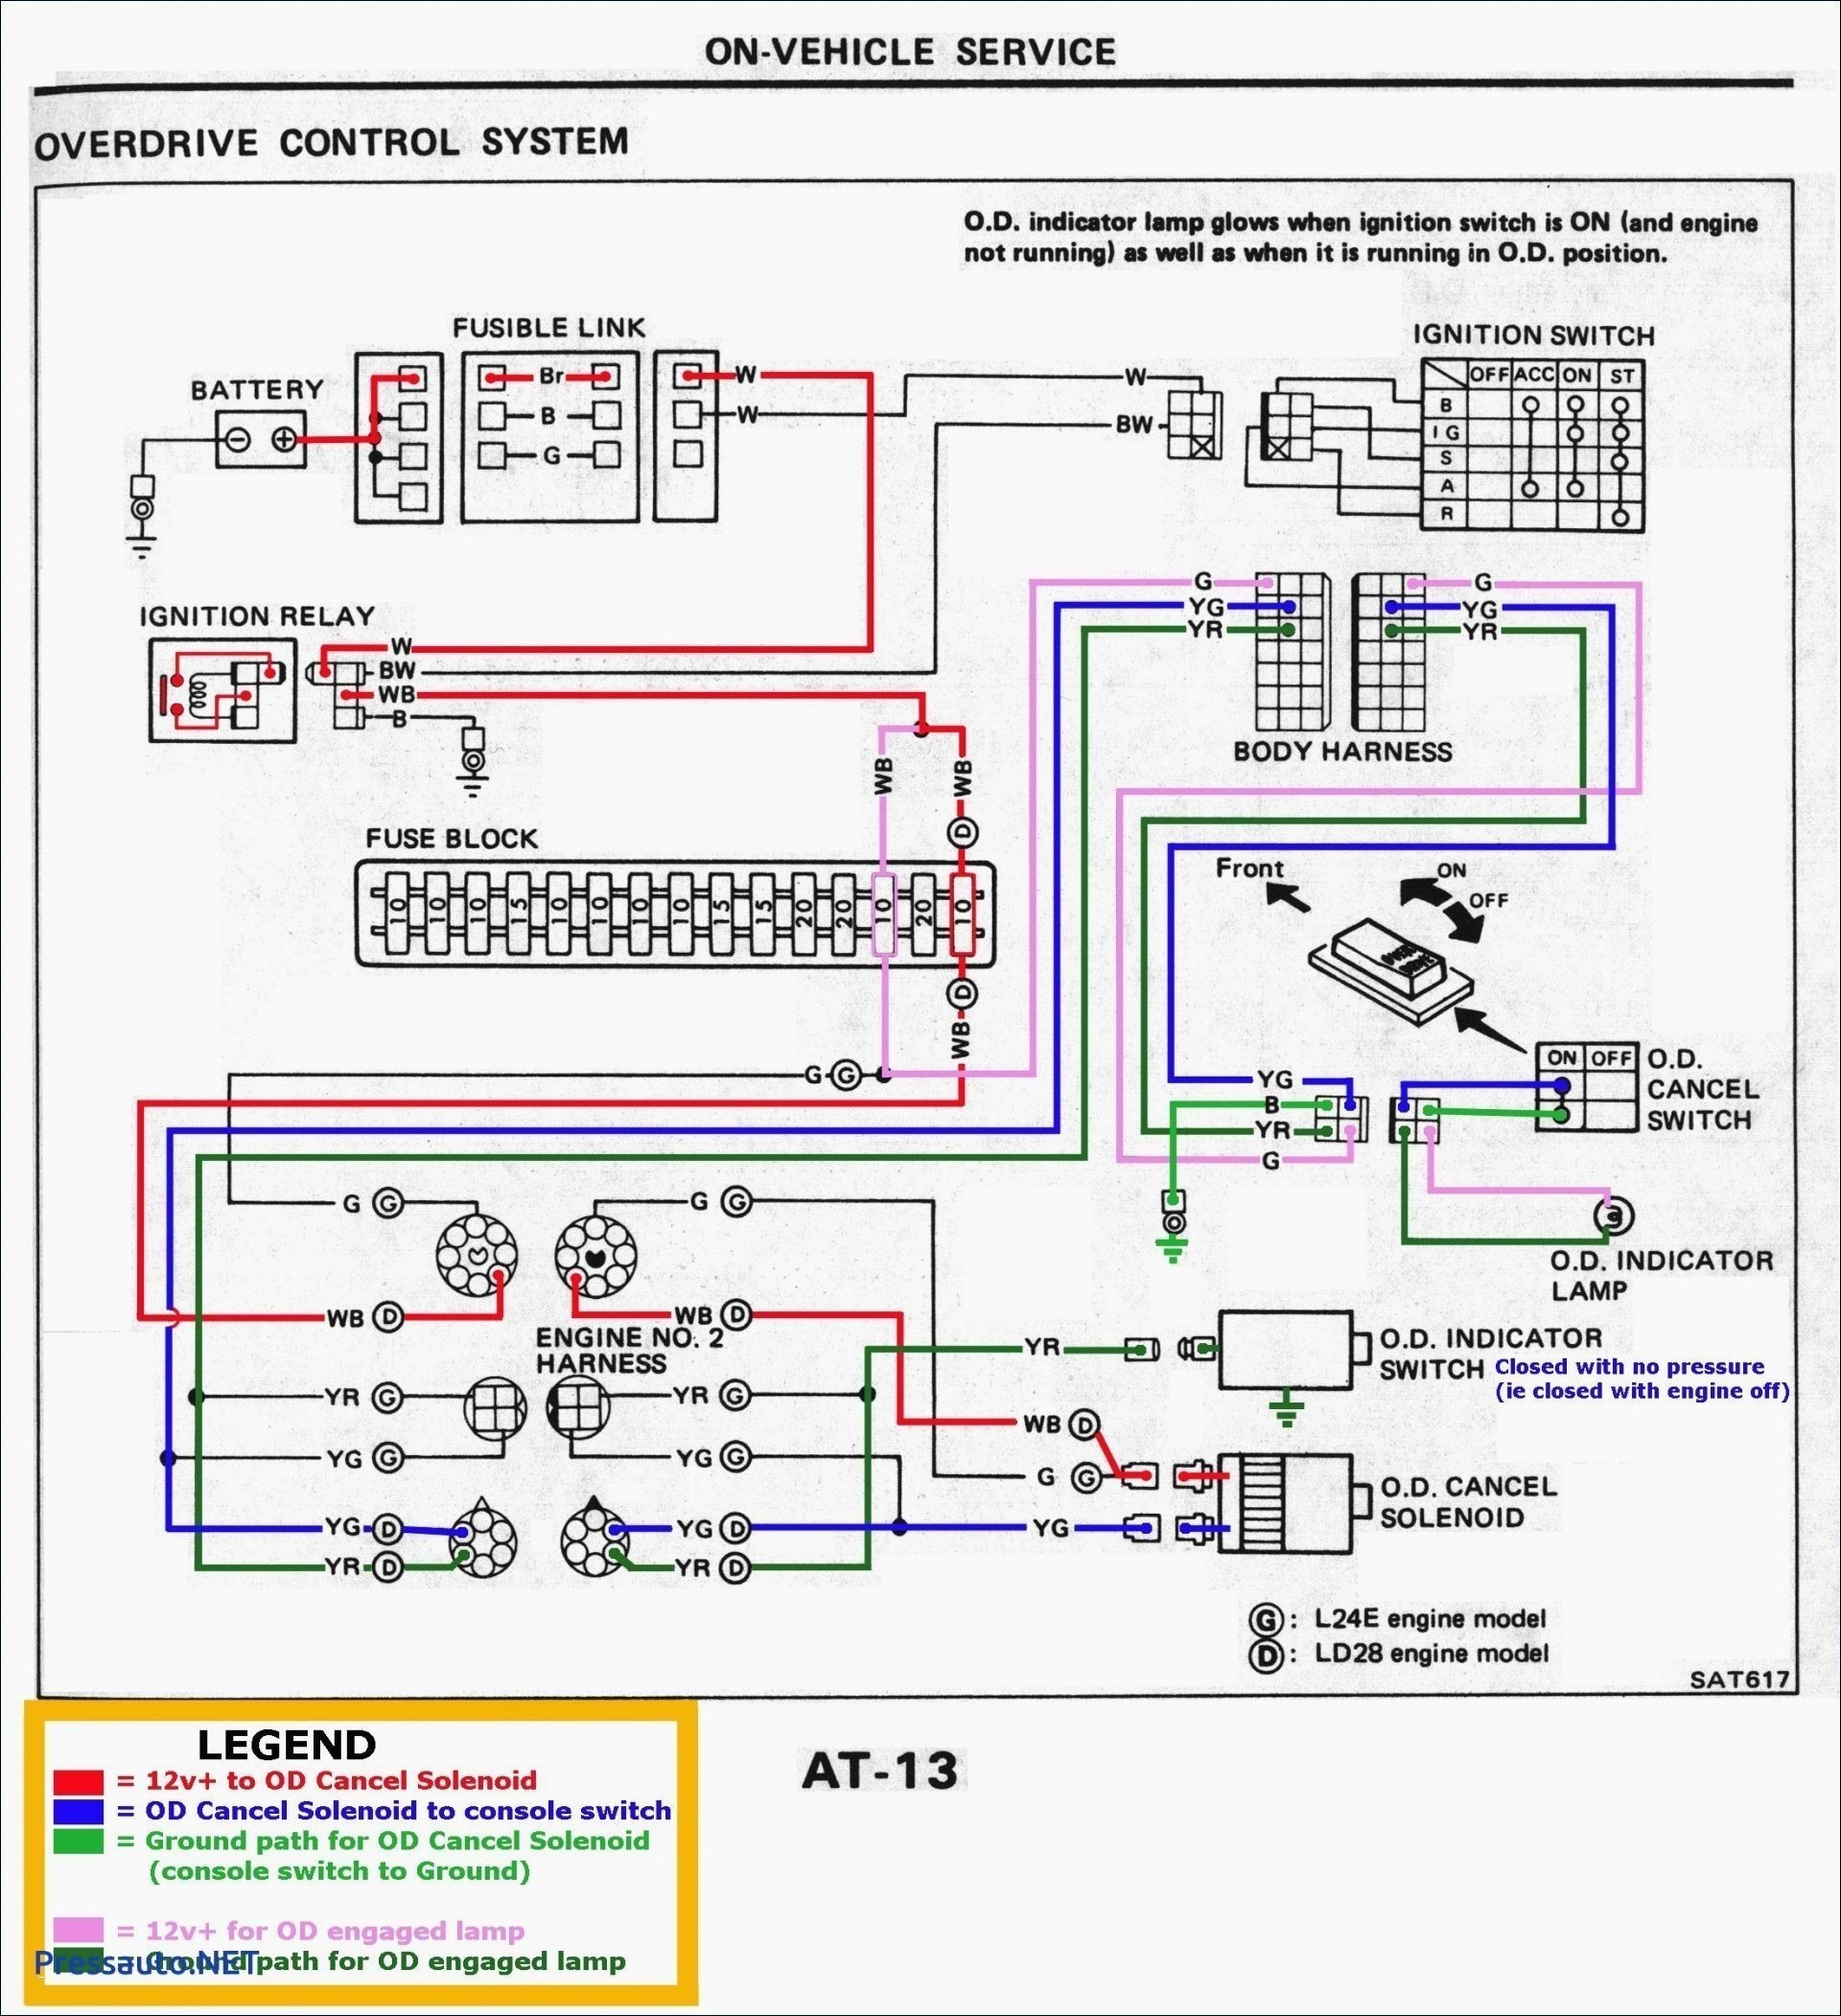 Circuit Diagram for House Wiring Best Circuit Diagram House Wiring Fresh Basic Electrical Wiring Lamp